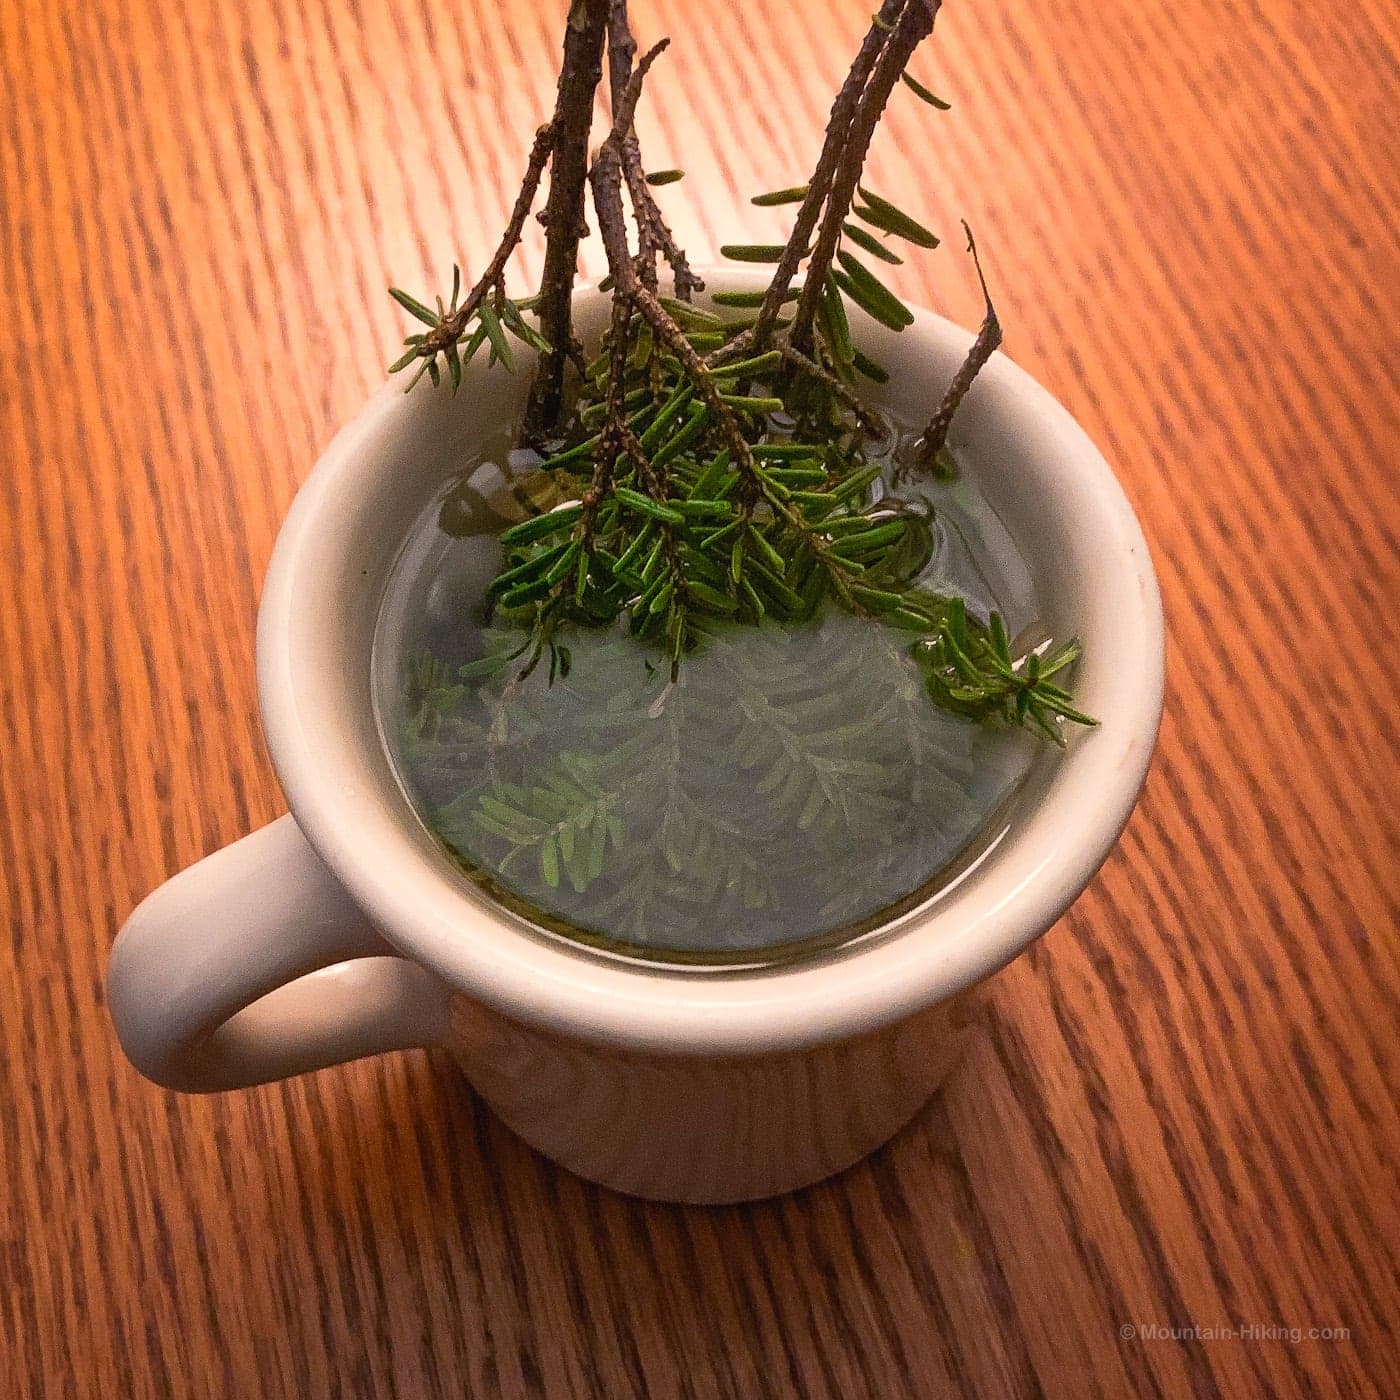 brewing pine needle tea / hemlock twigs in hot water